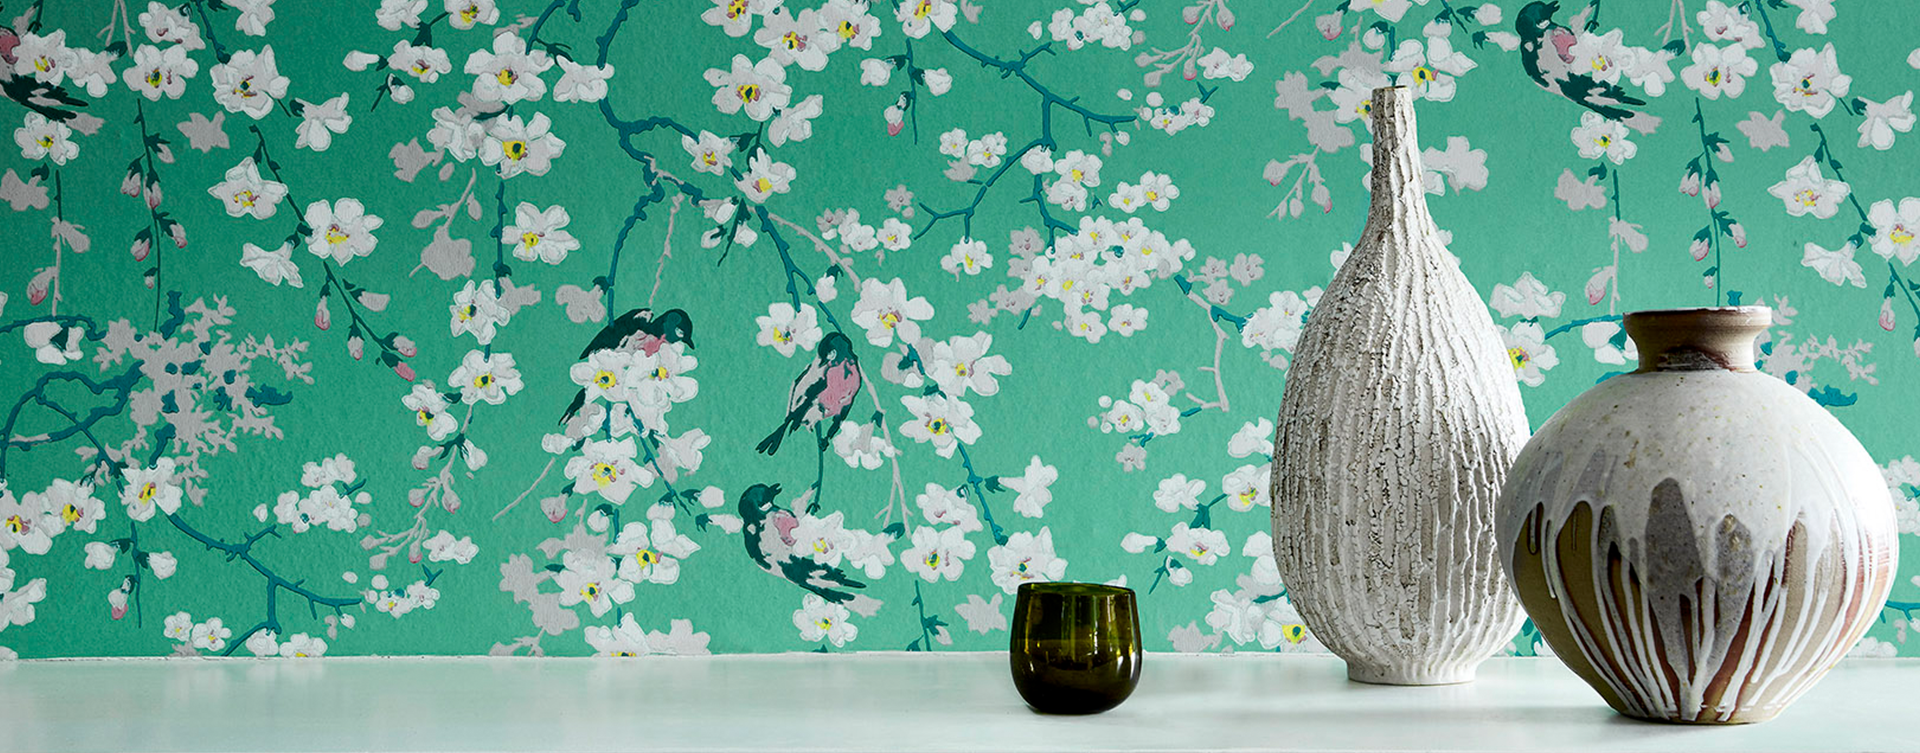 Blossom Patterned with Birds Little Greene Wallpaper. John Willox Kitchen Design is a supplier of Little Greene Paint and Wallpaper.